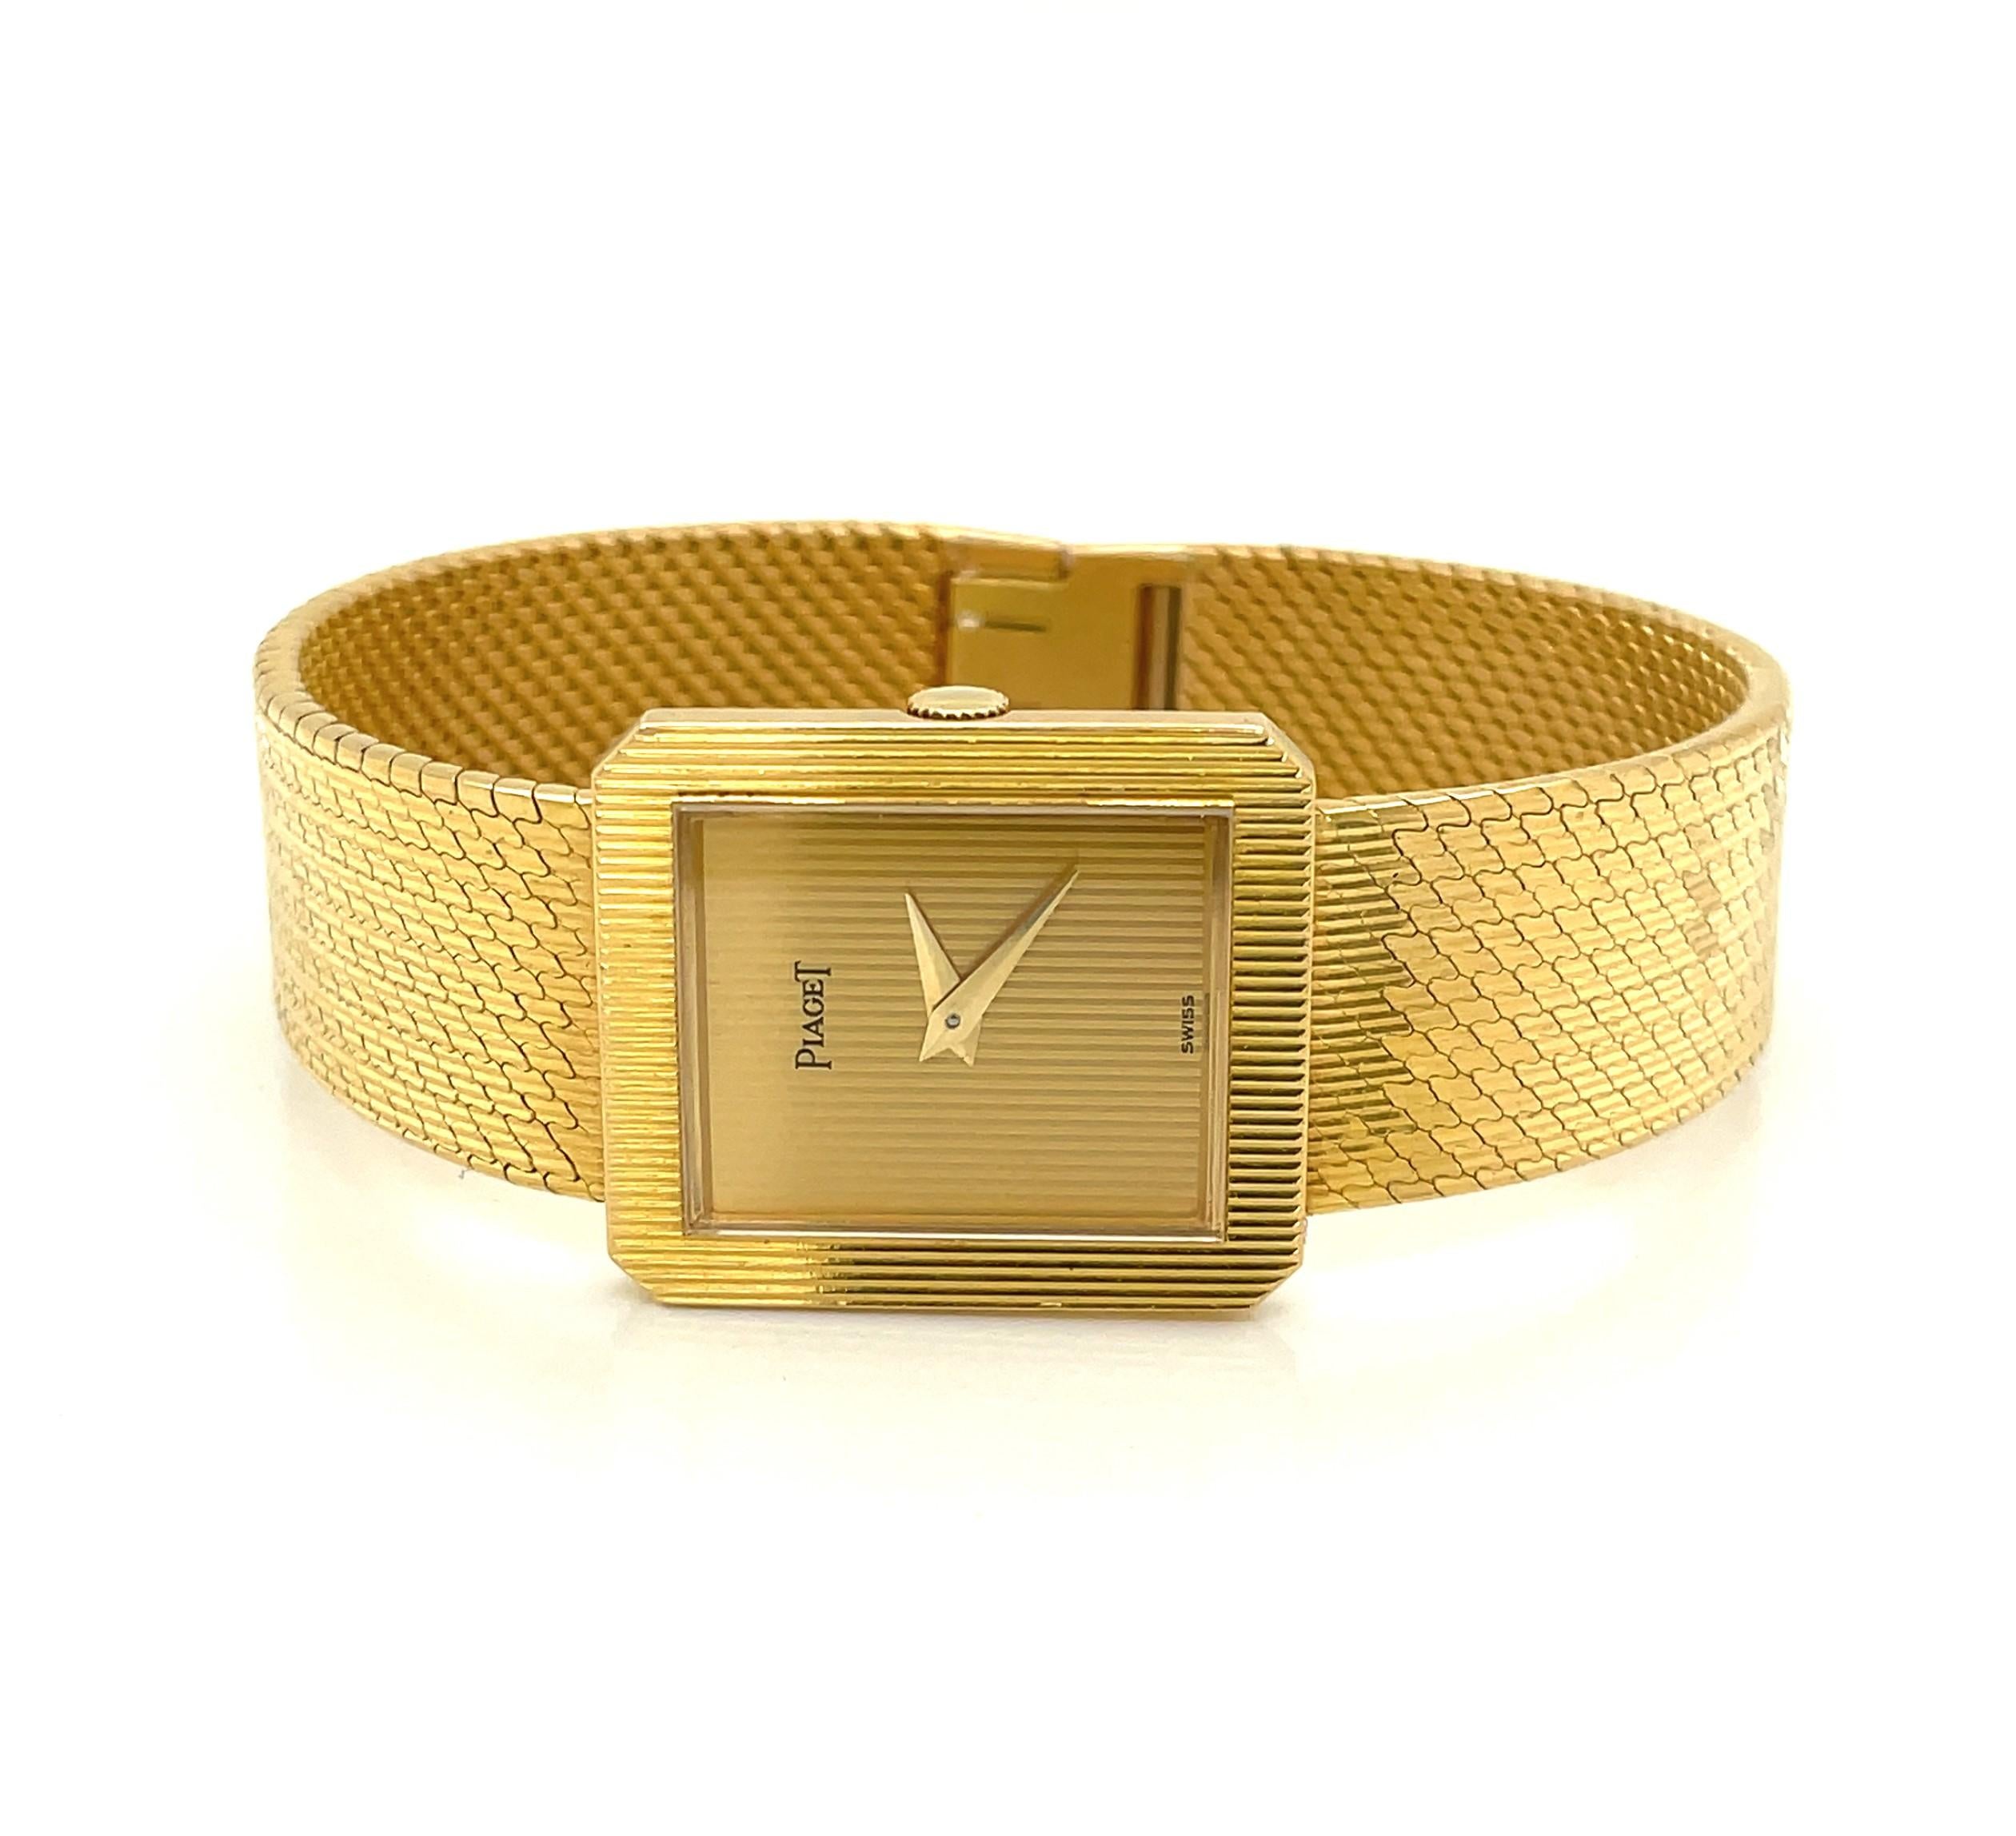 Piaget Protocol 18 Karat Gold Womens Bracelet Wrist Watch 10